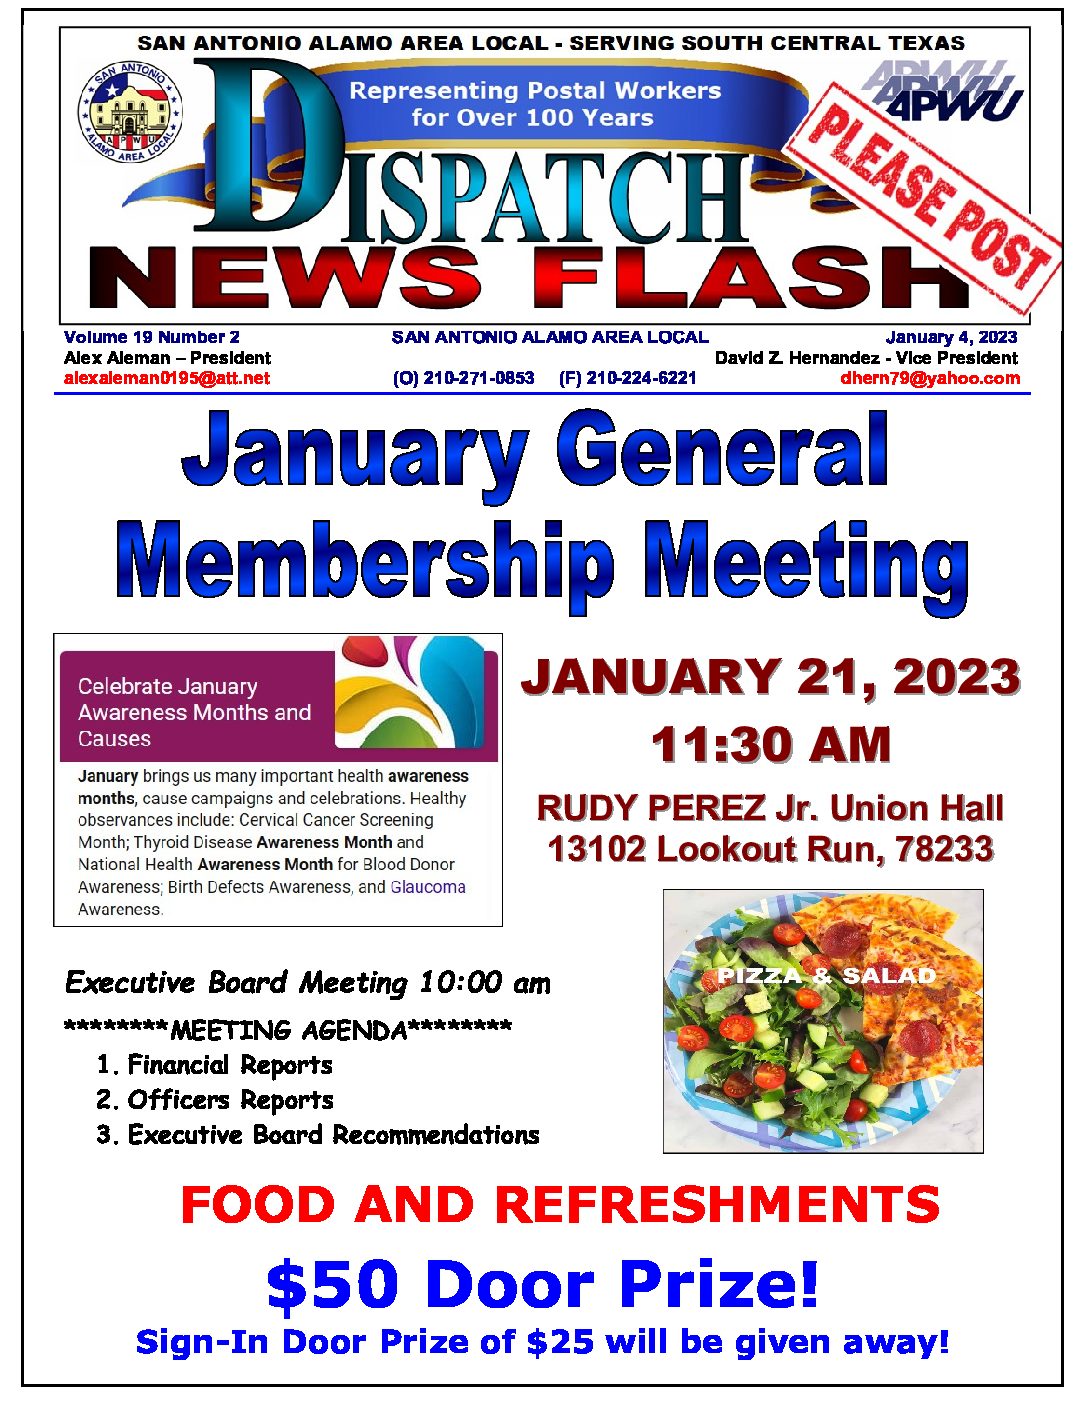 NewsFlash 19-2 – January General Membership Meeting - 